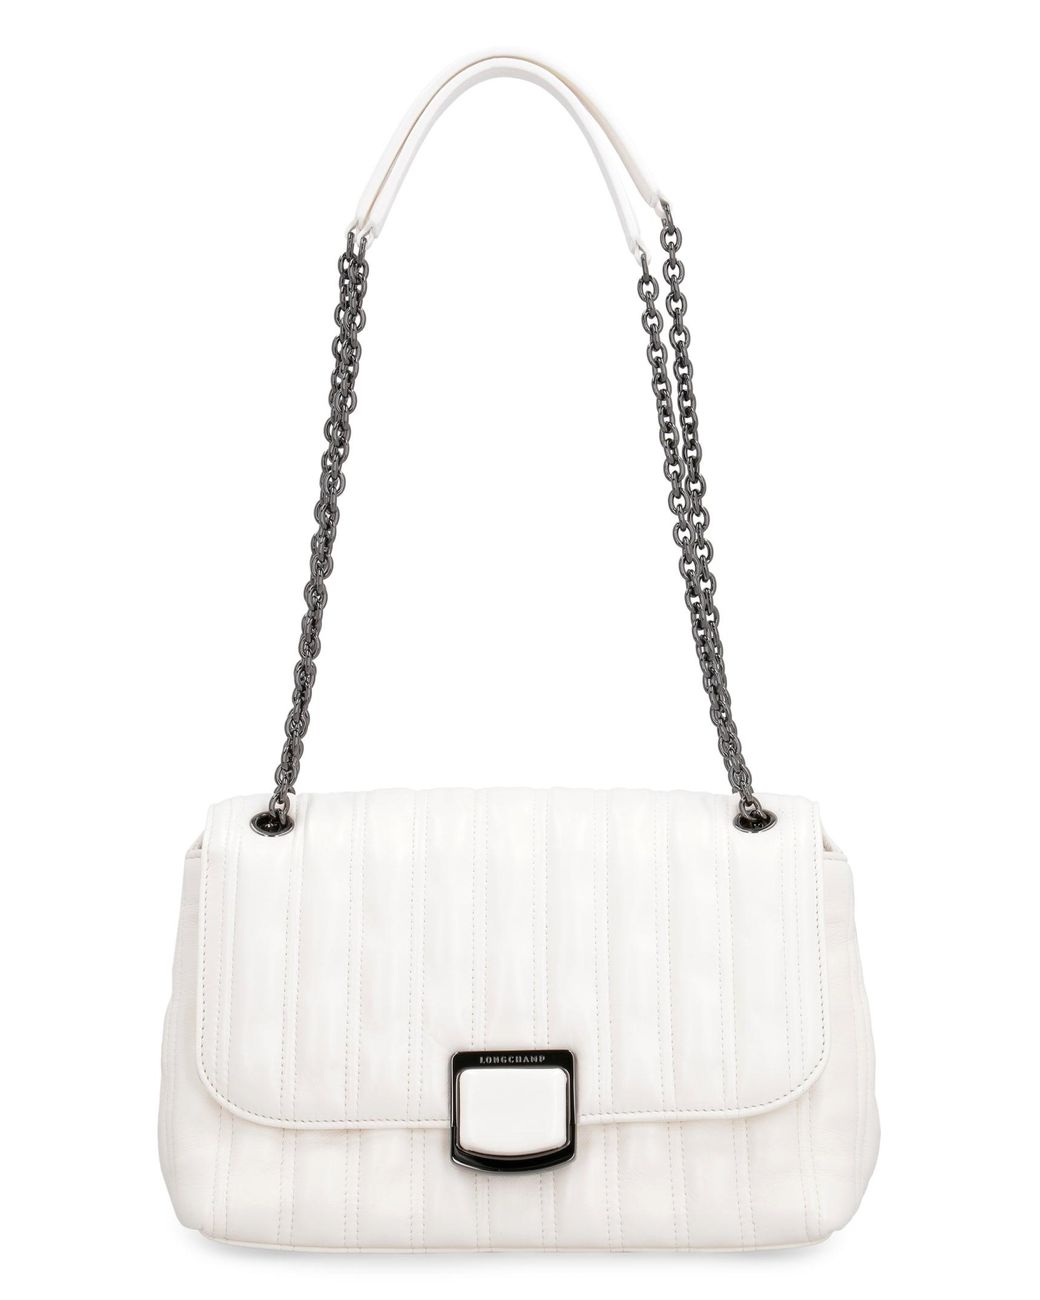 Longchamp Brioche Leather Shoulder Bag in White | Lyst